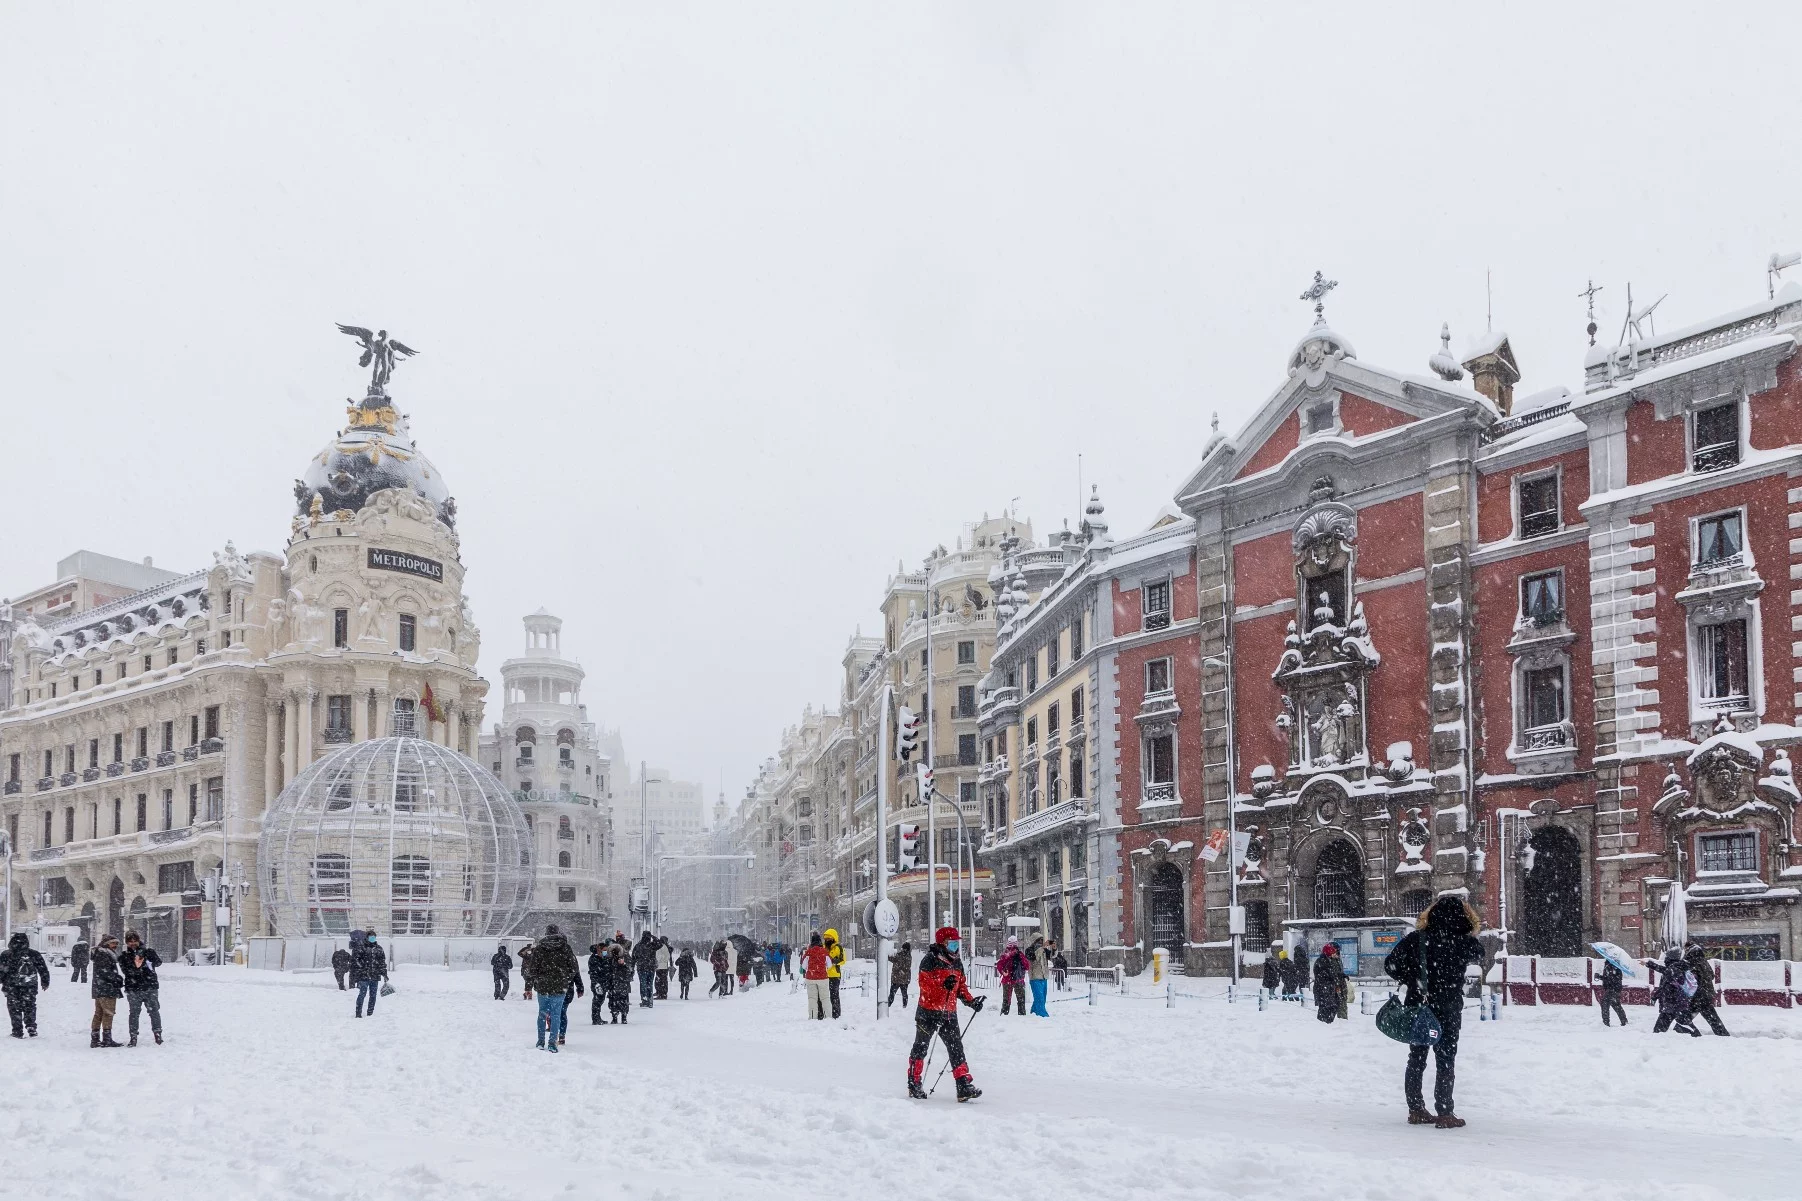 Snow in Madrid city center, winter season in Spain 